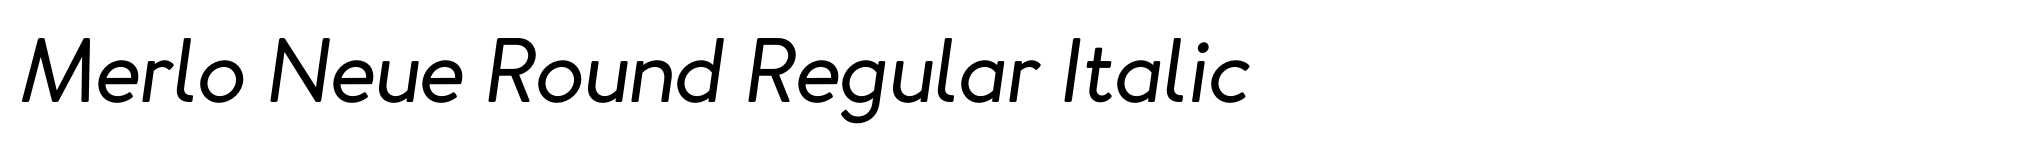 Merlo Neue Round Regular Italic image